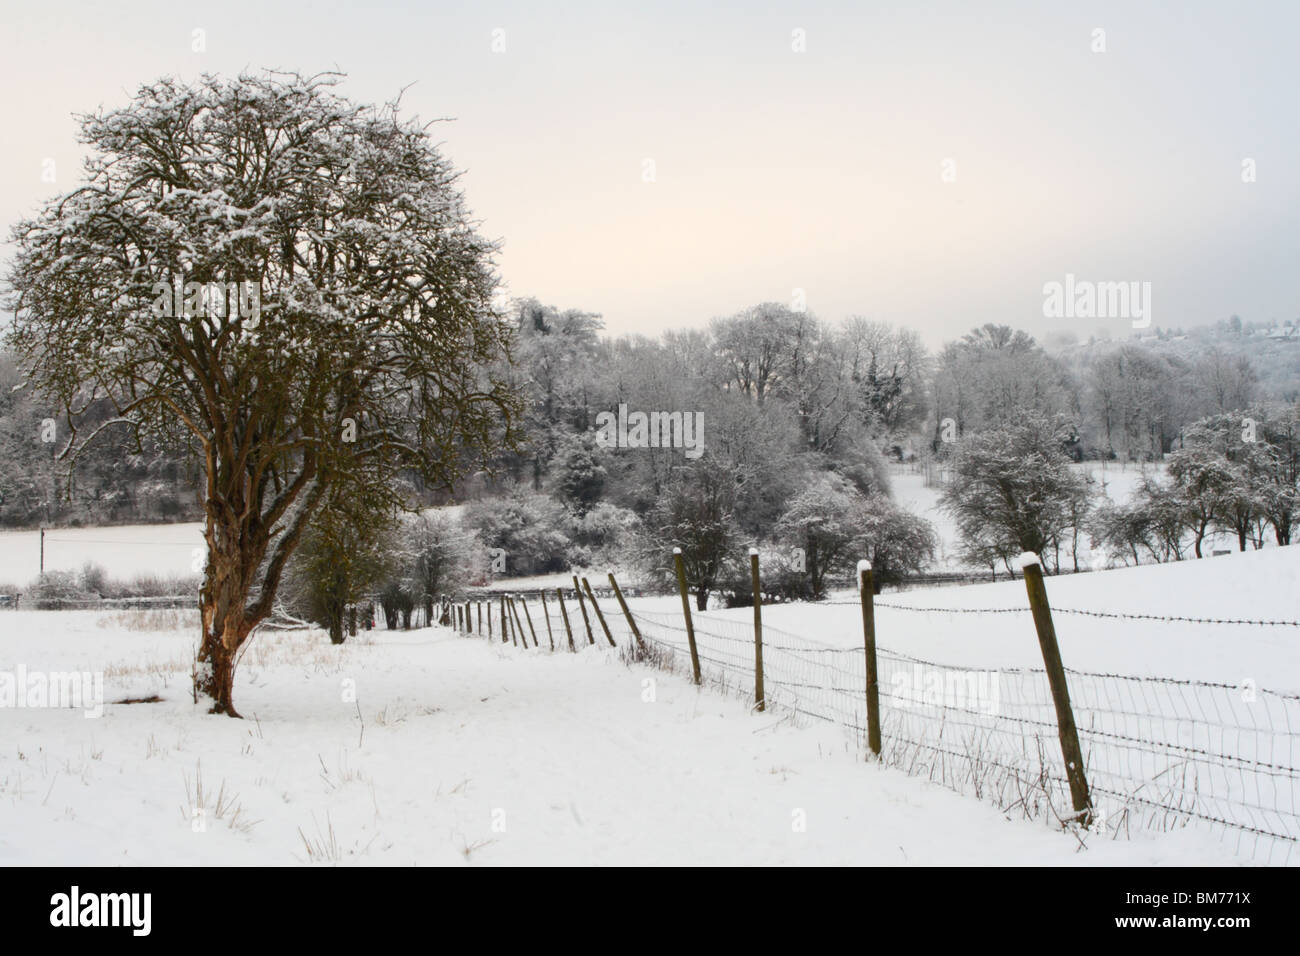 Winter snowfall in Tinker Woods, Downley, High Wycombe, Buckinghamshire, United Kingdom Stock Photo